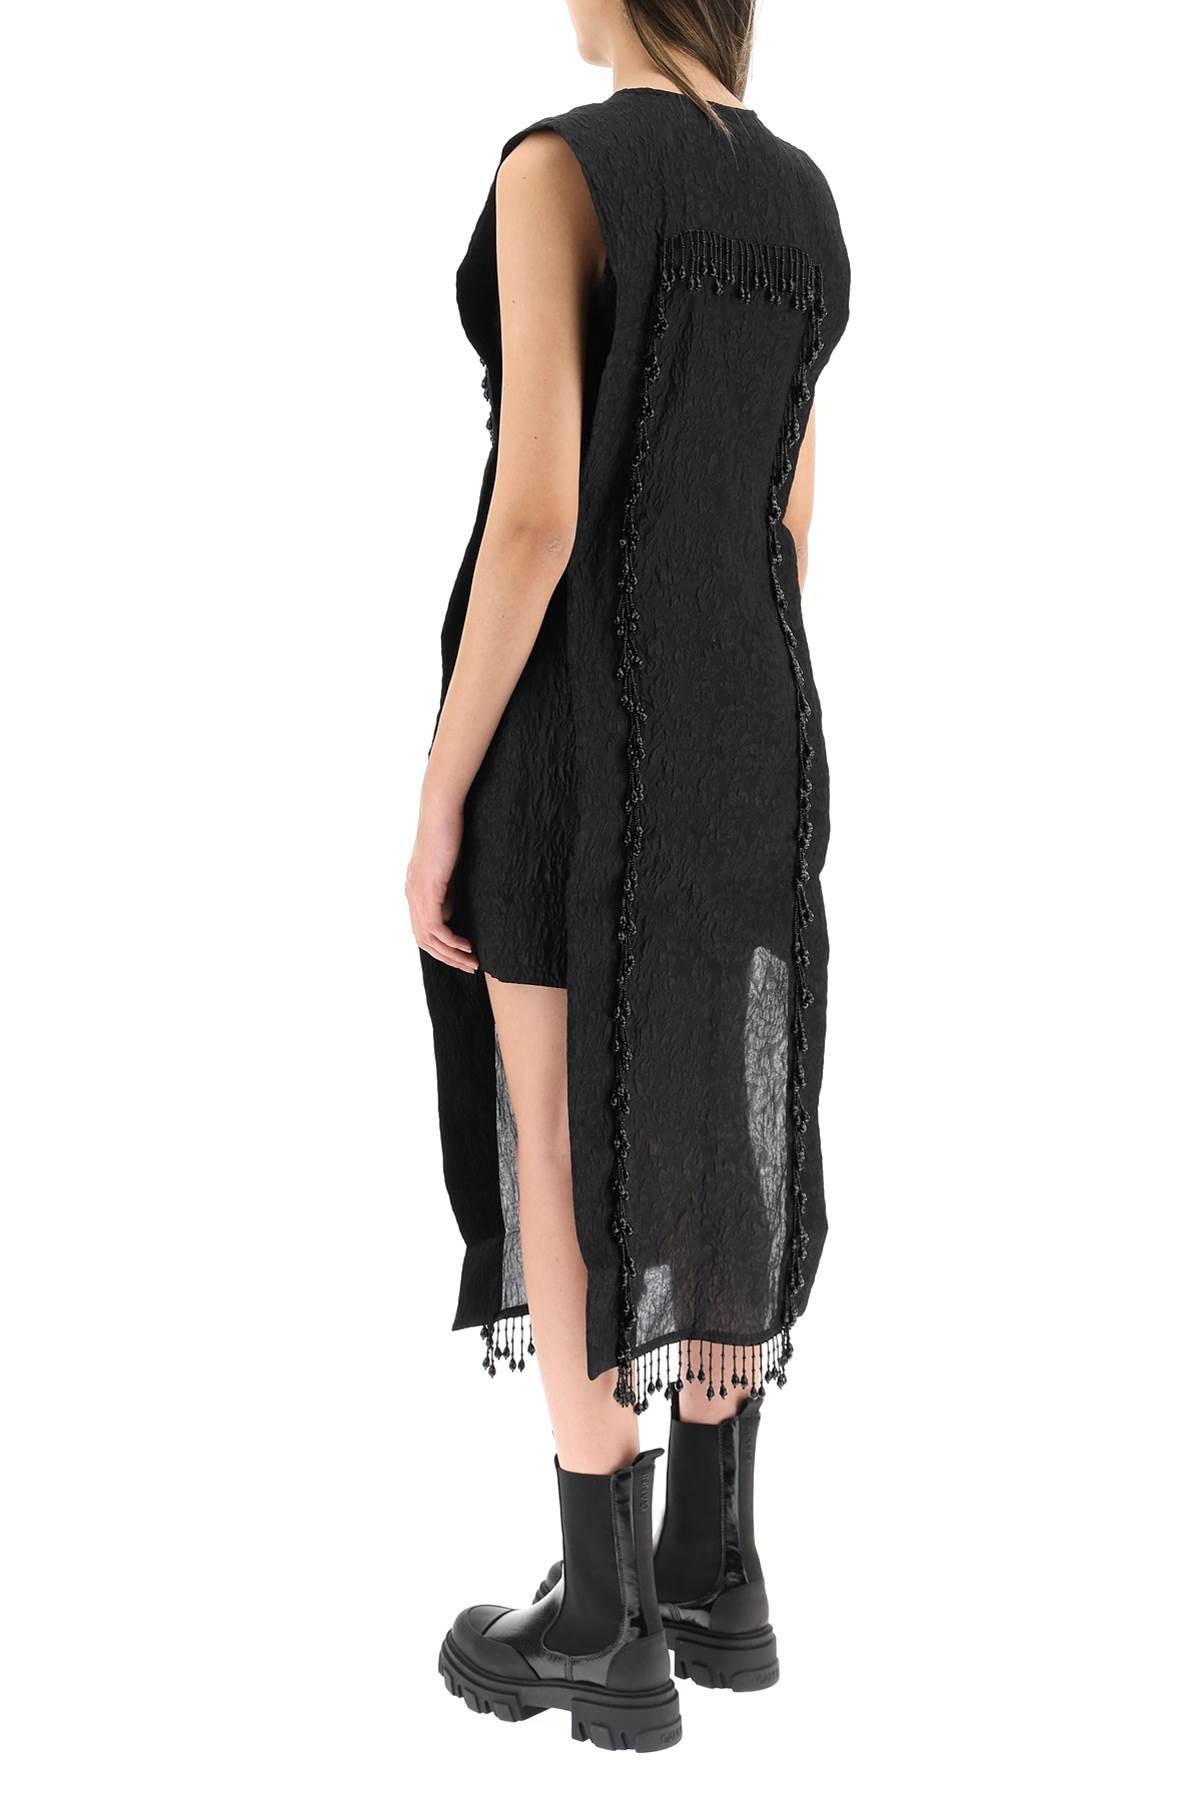 Save 61% Ganni Synthetic Jacquard Organza Dress in Black Womens Dresses Ganni Dresses 